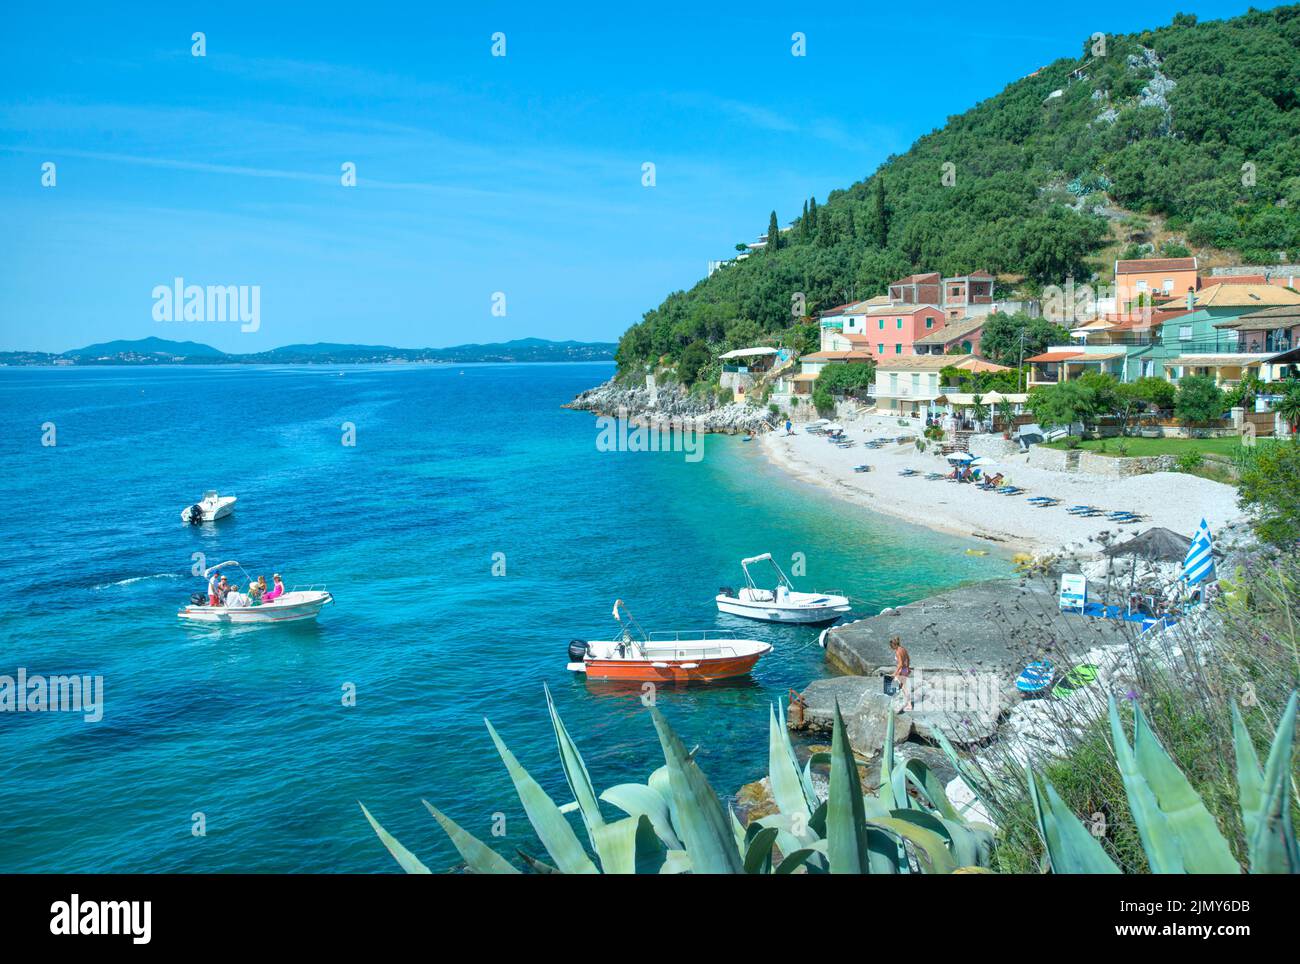 Kaminaki beach, Corfu, Ionian islands, Greece Stock Photo